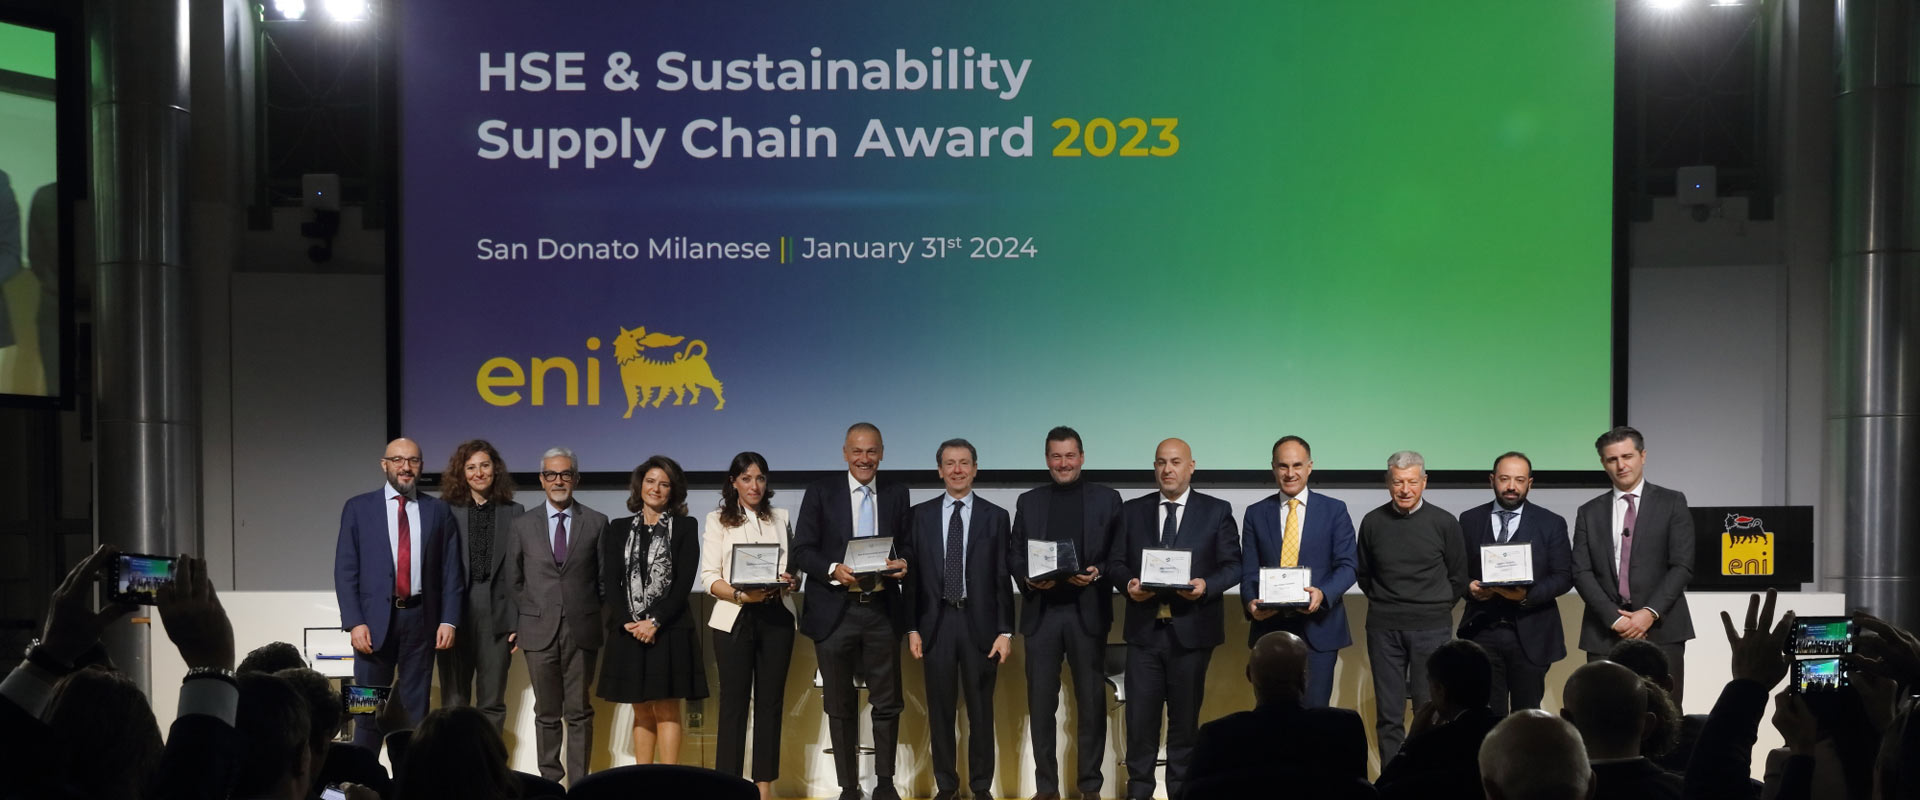 RICCOBONI SPA HAS WON THE “Eni HSE & Sustainability Supply Chain Award 2023”